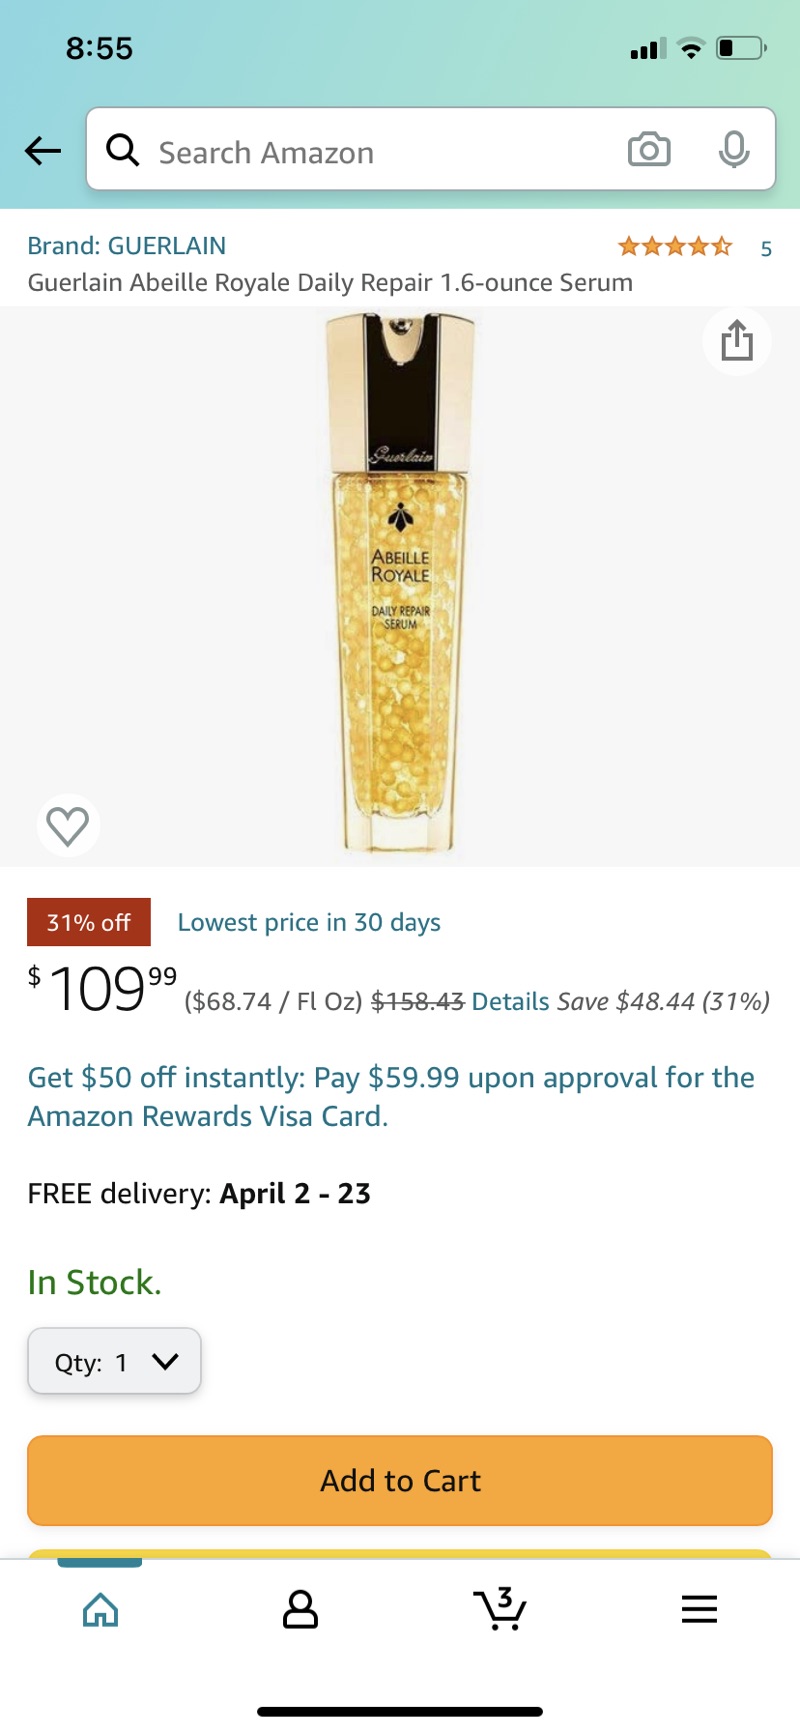 Amazon.com: Guerlain Abeille Royale Daily Repair 1.6-ounce Serum: Beauty
娇兰蜂皇修复精华 1.6oz